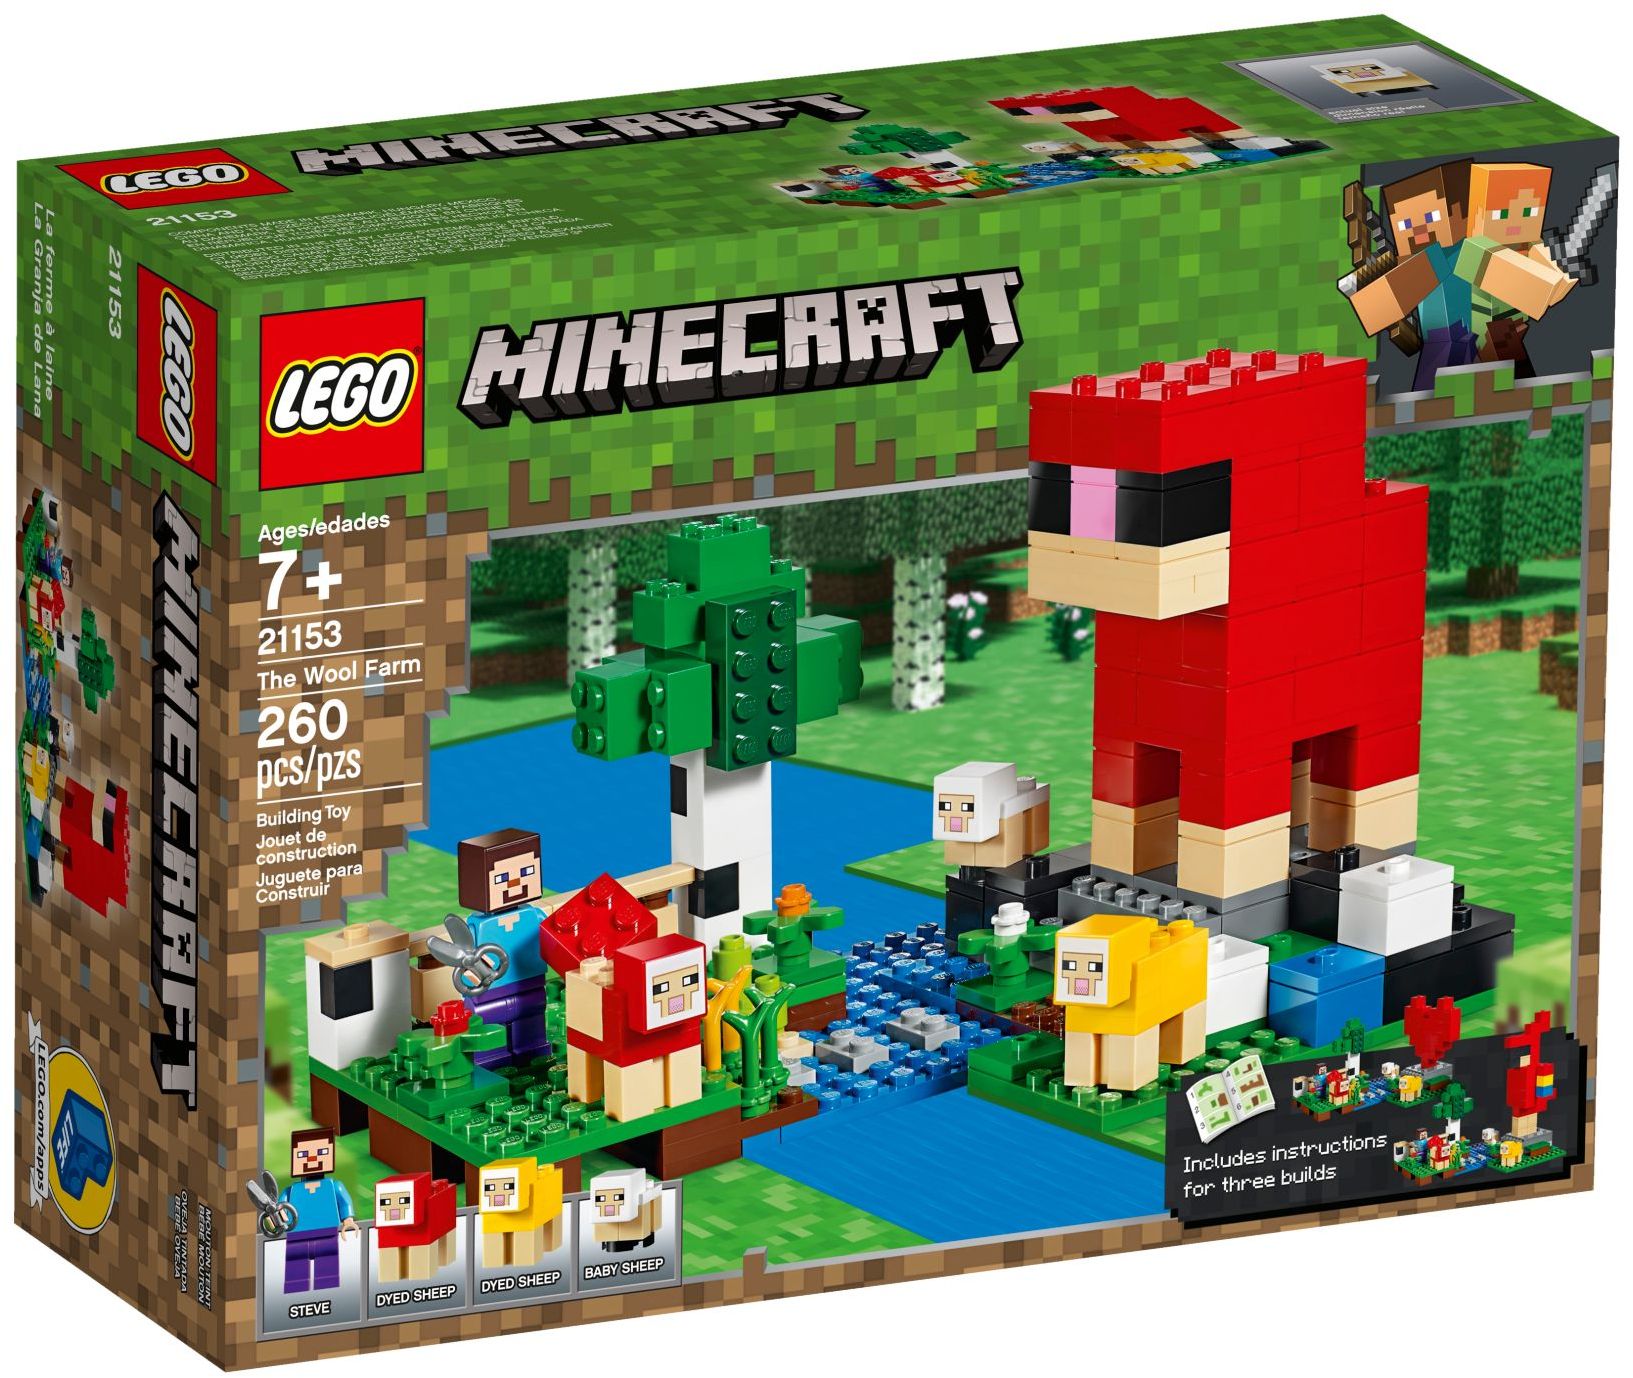 ❤️ 21153 LEGO Minecraft The Wool Farm - Bộ đồ chơi Trang trại sản xuất len